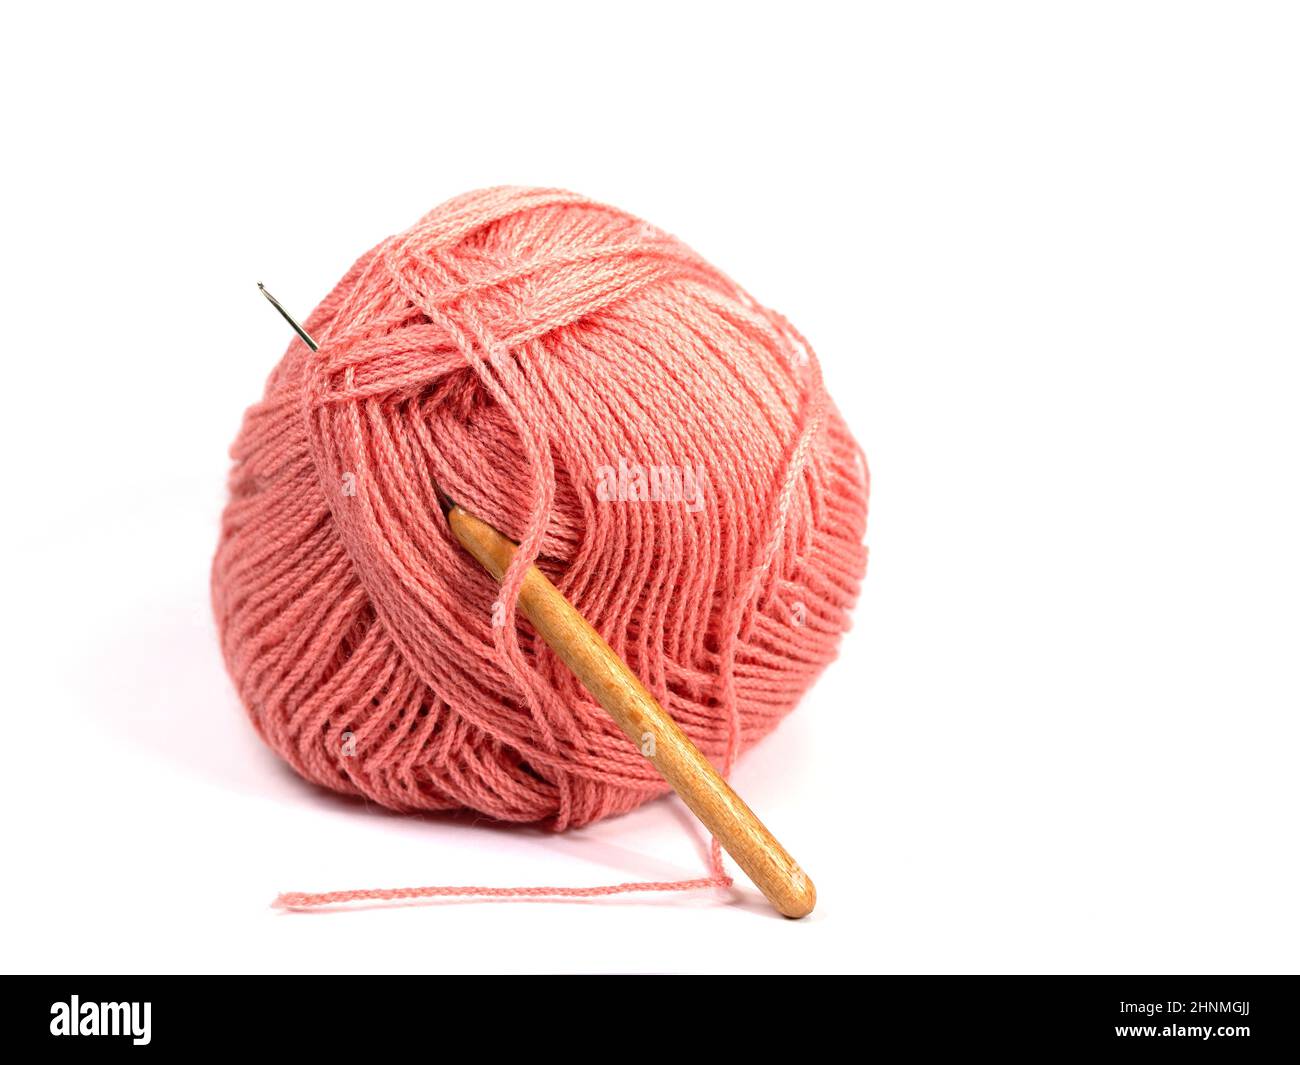 Red crochet yarn against white background Stock Photo